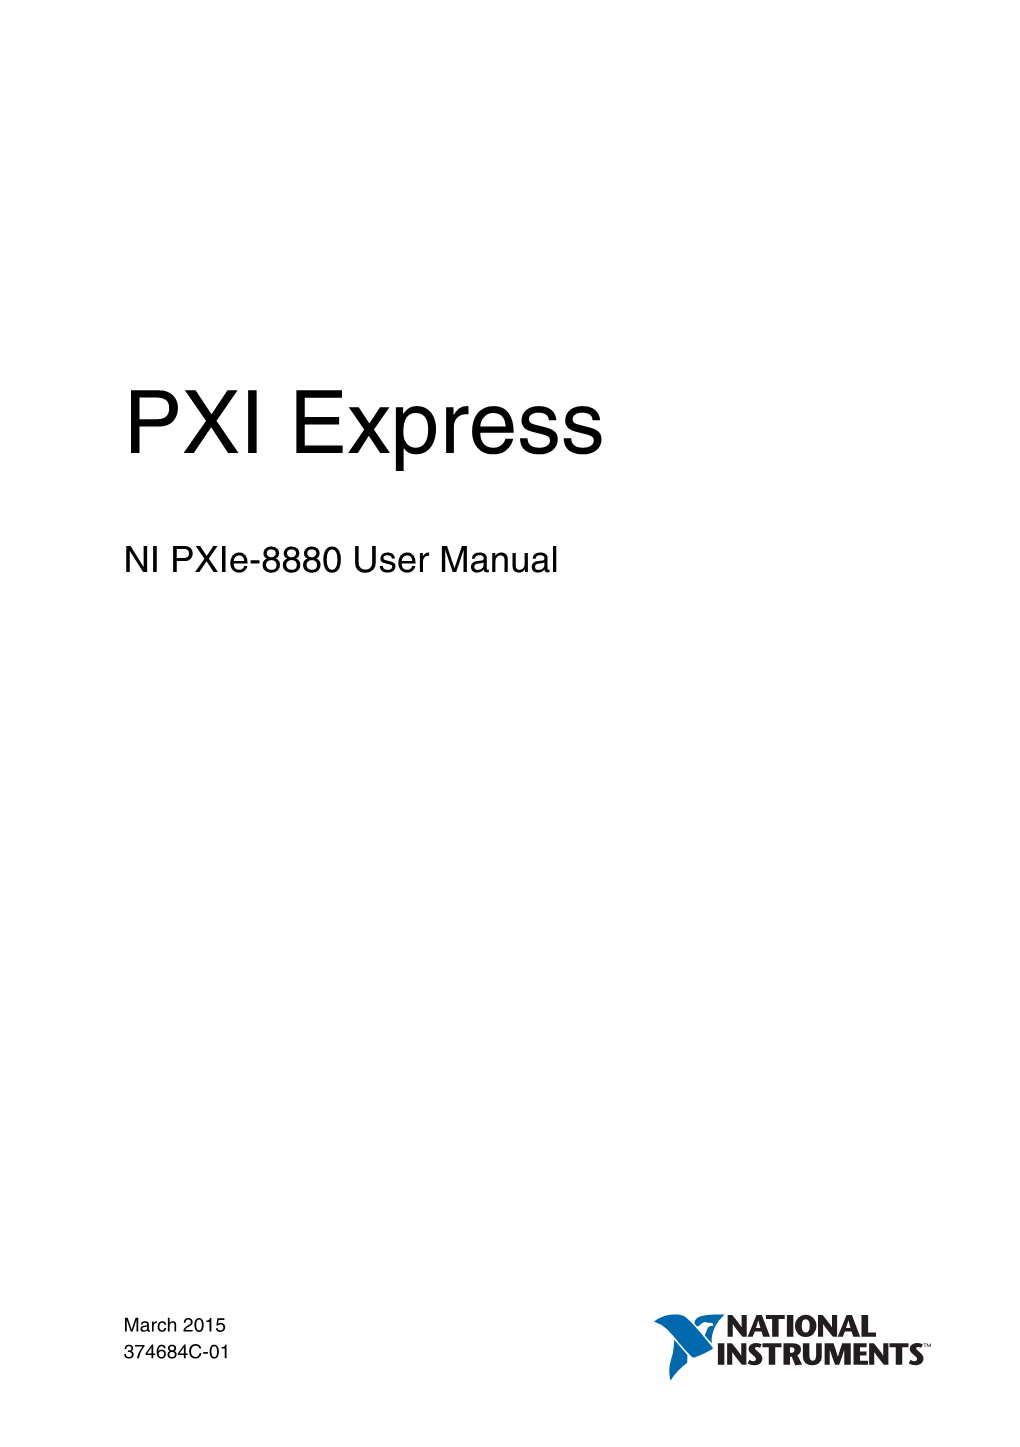 NI Pxie-8880 User Manual